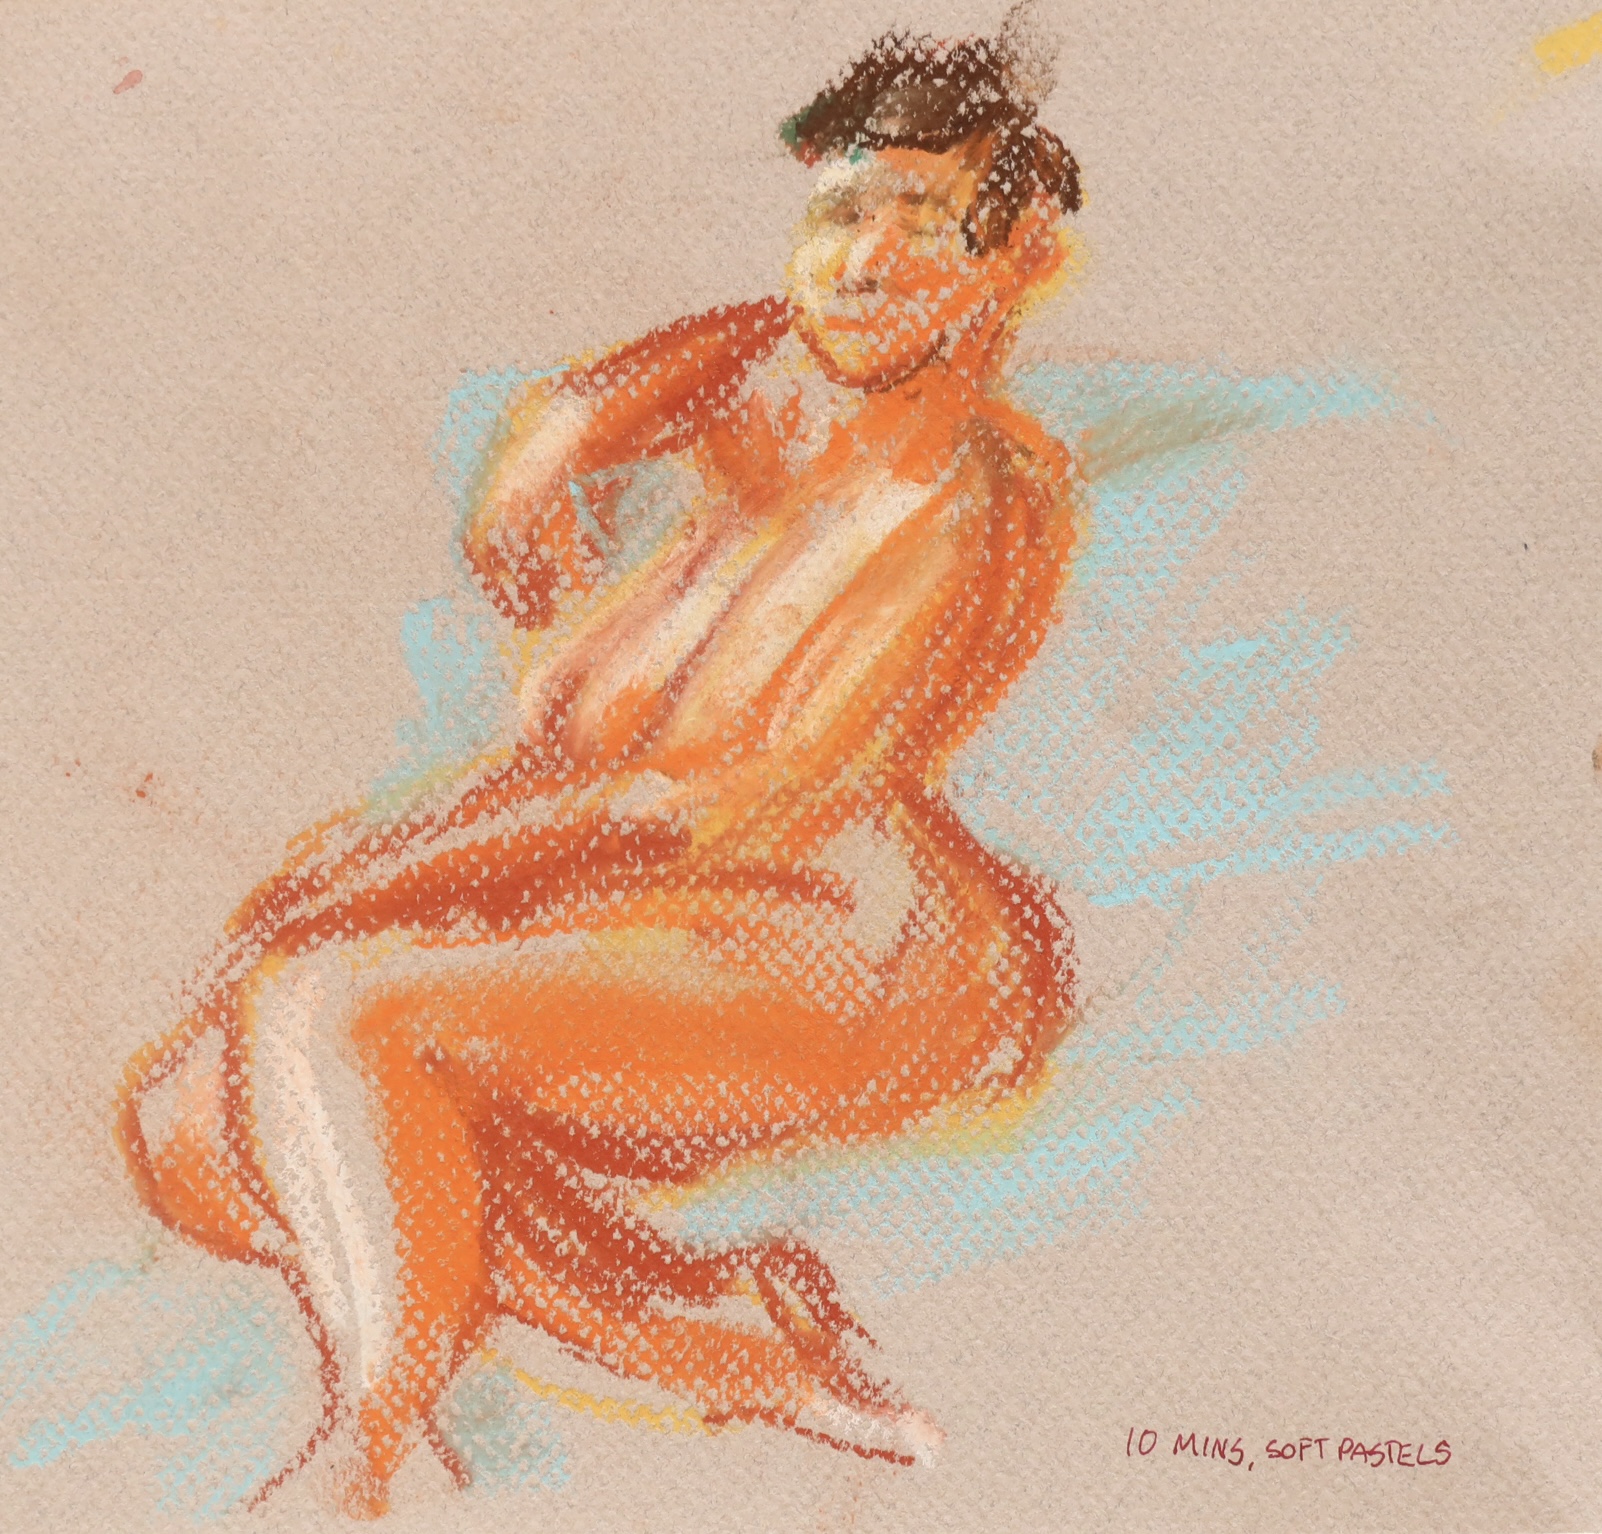 IMG_5091.jpeg|Nude female figure in soft pastels